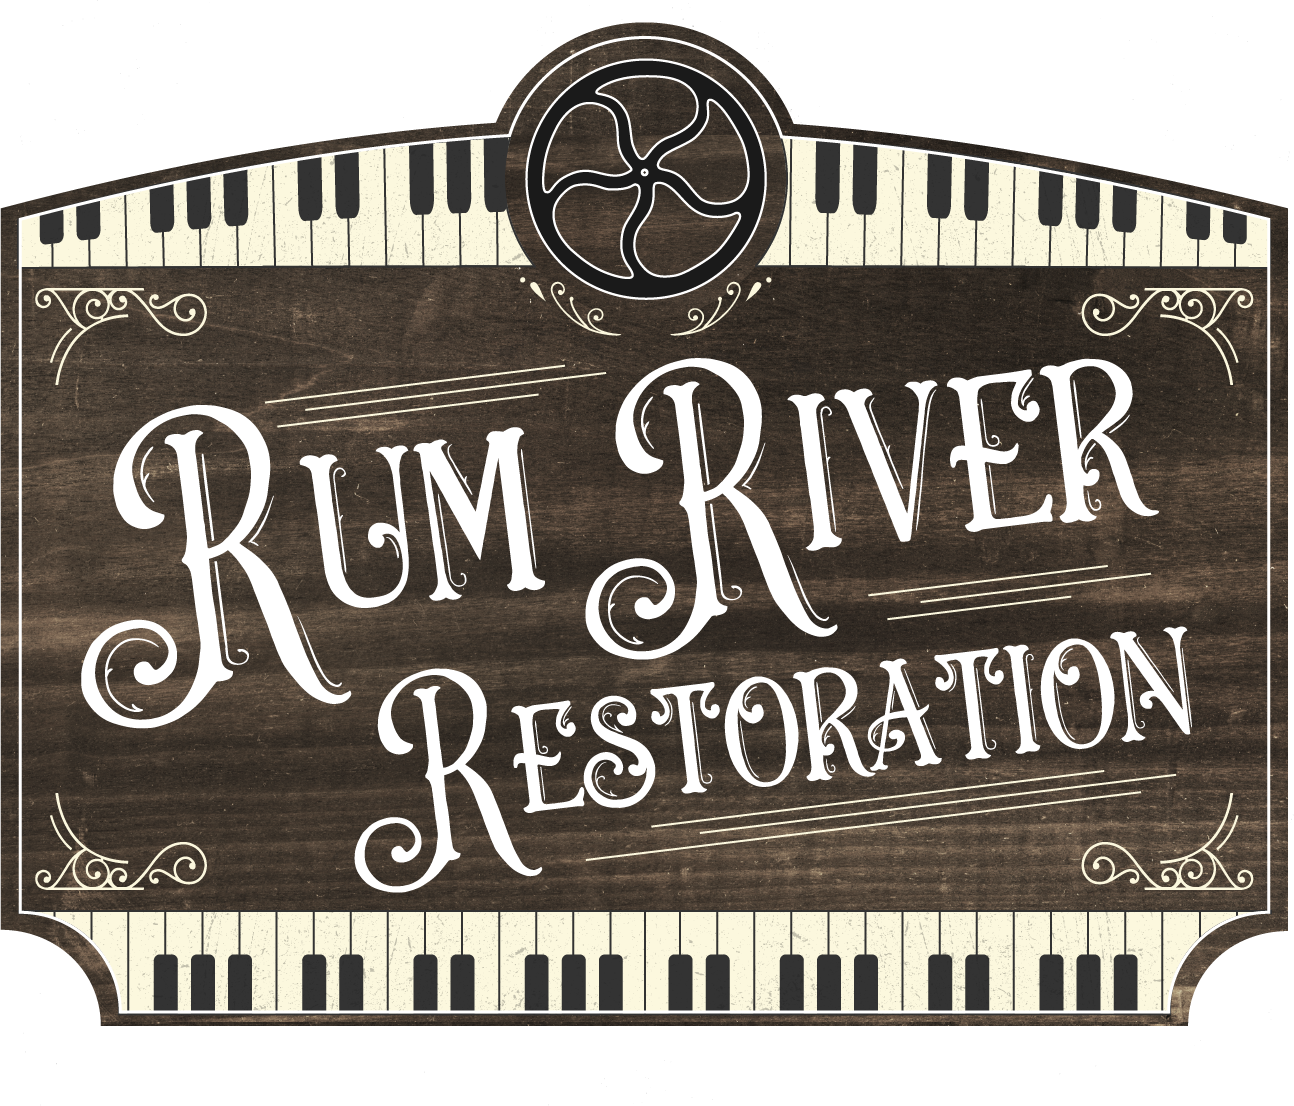 Rum River Restoration